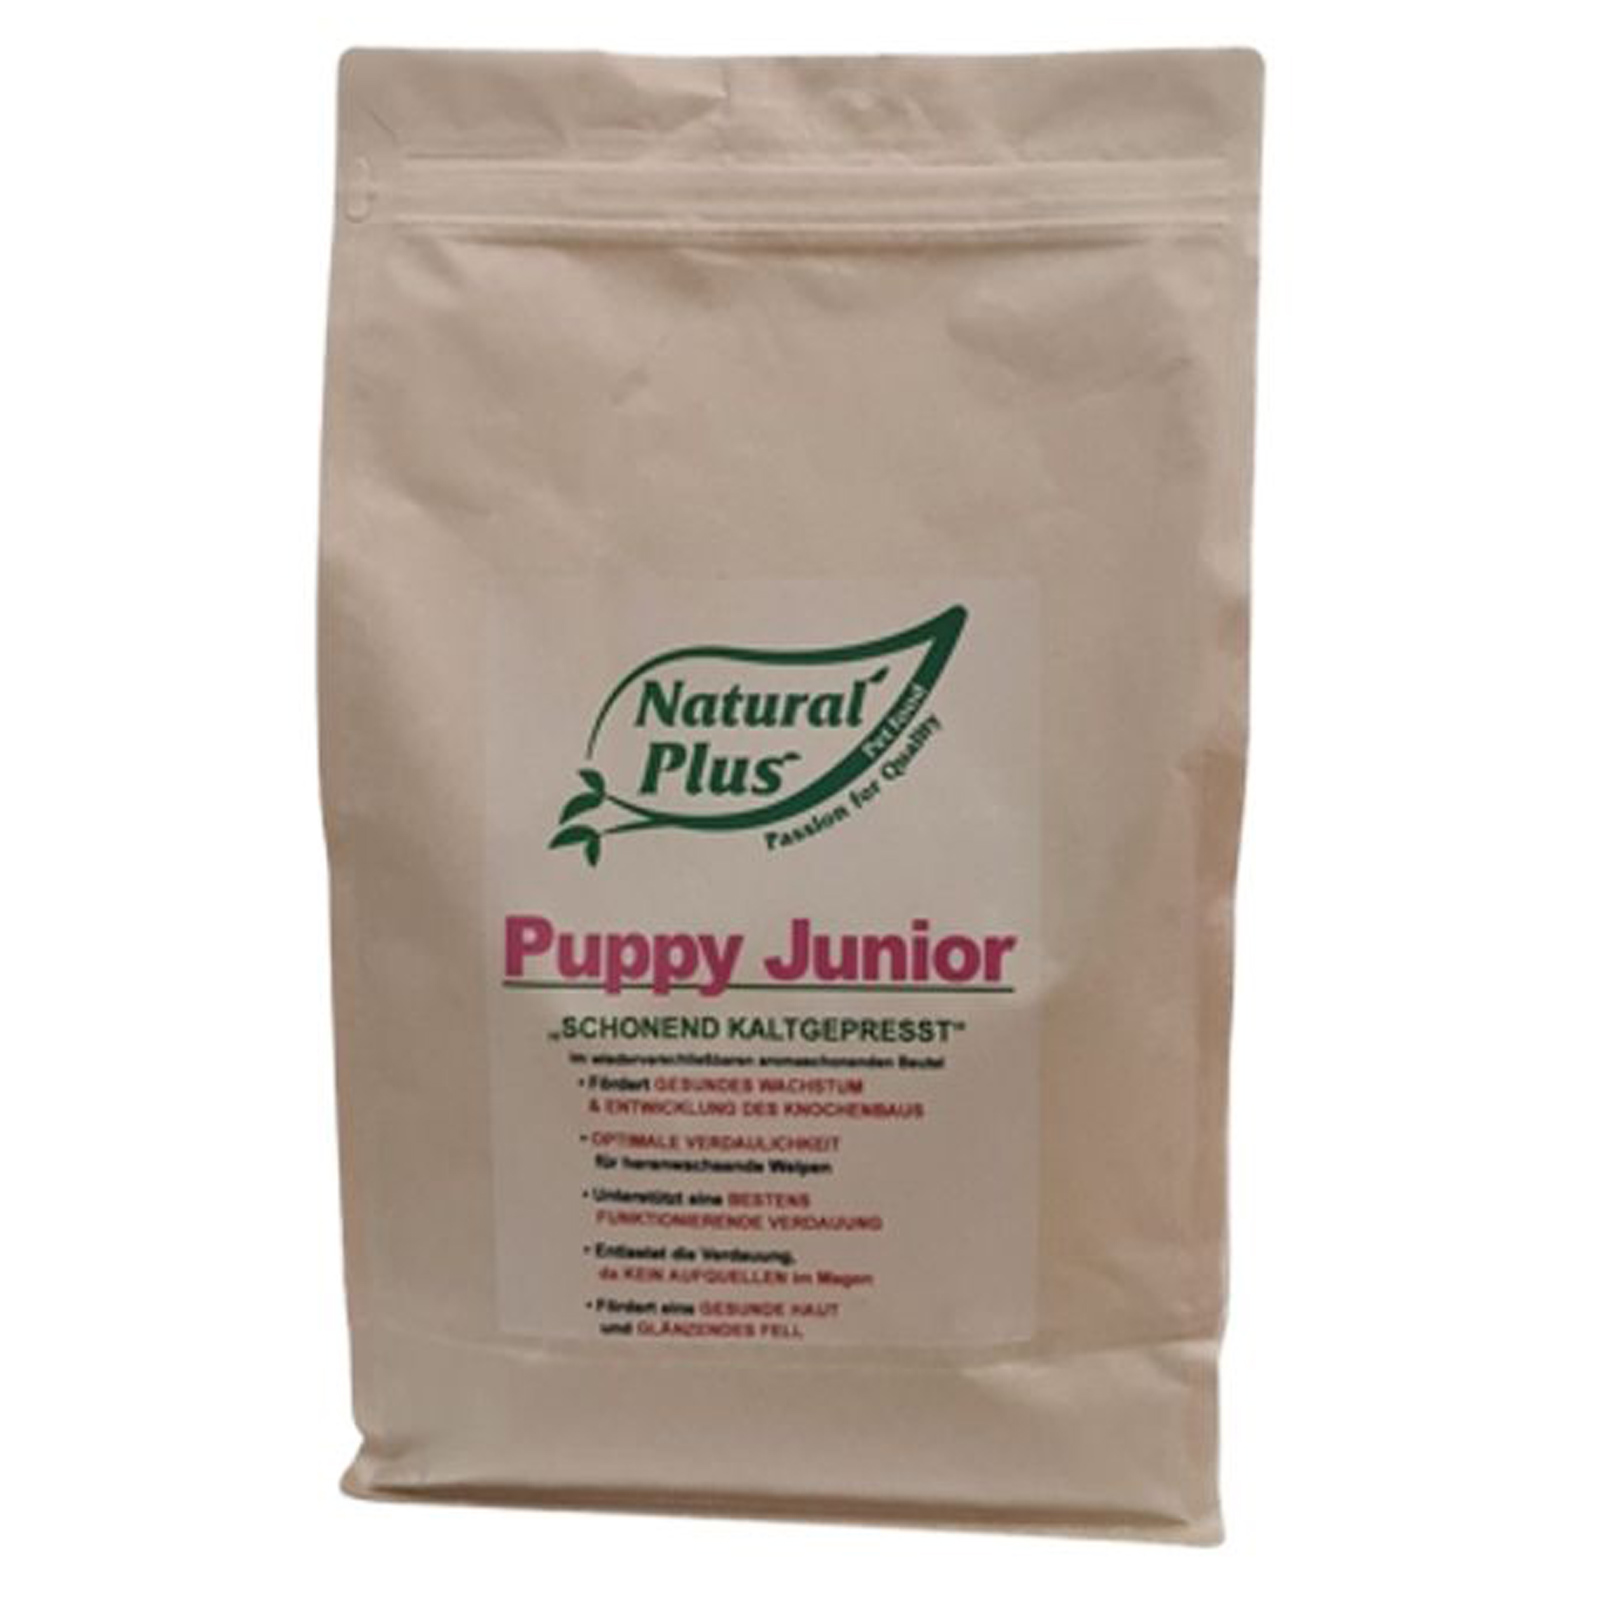 Natural Plus Puppy Junior, kaltgepresst 4 kg